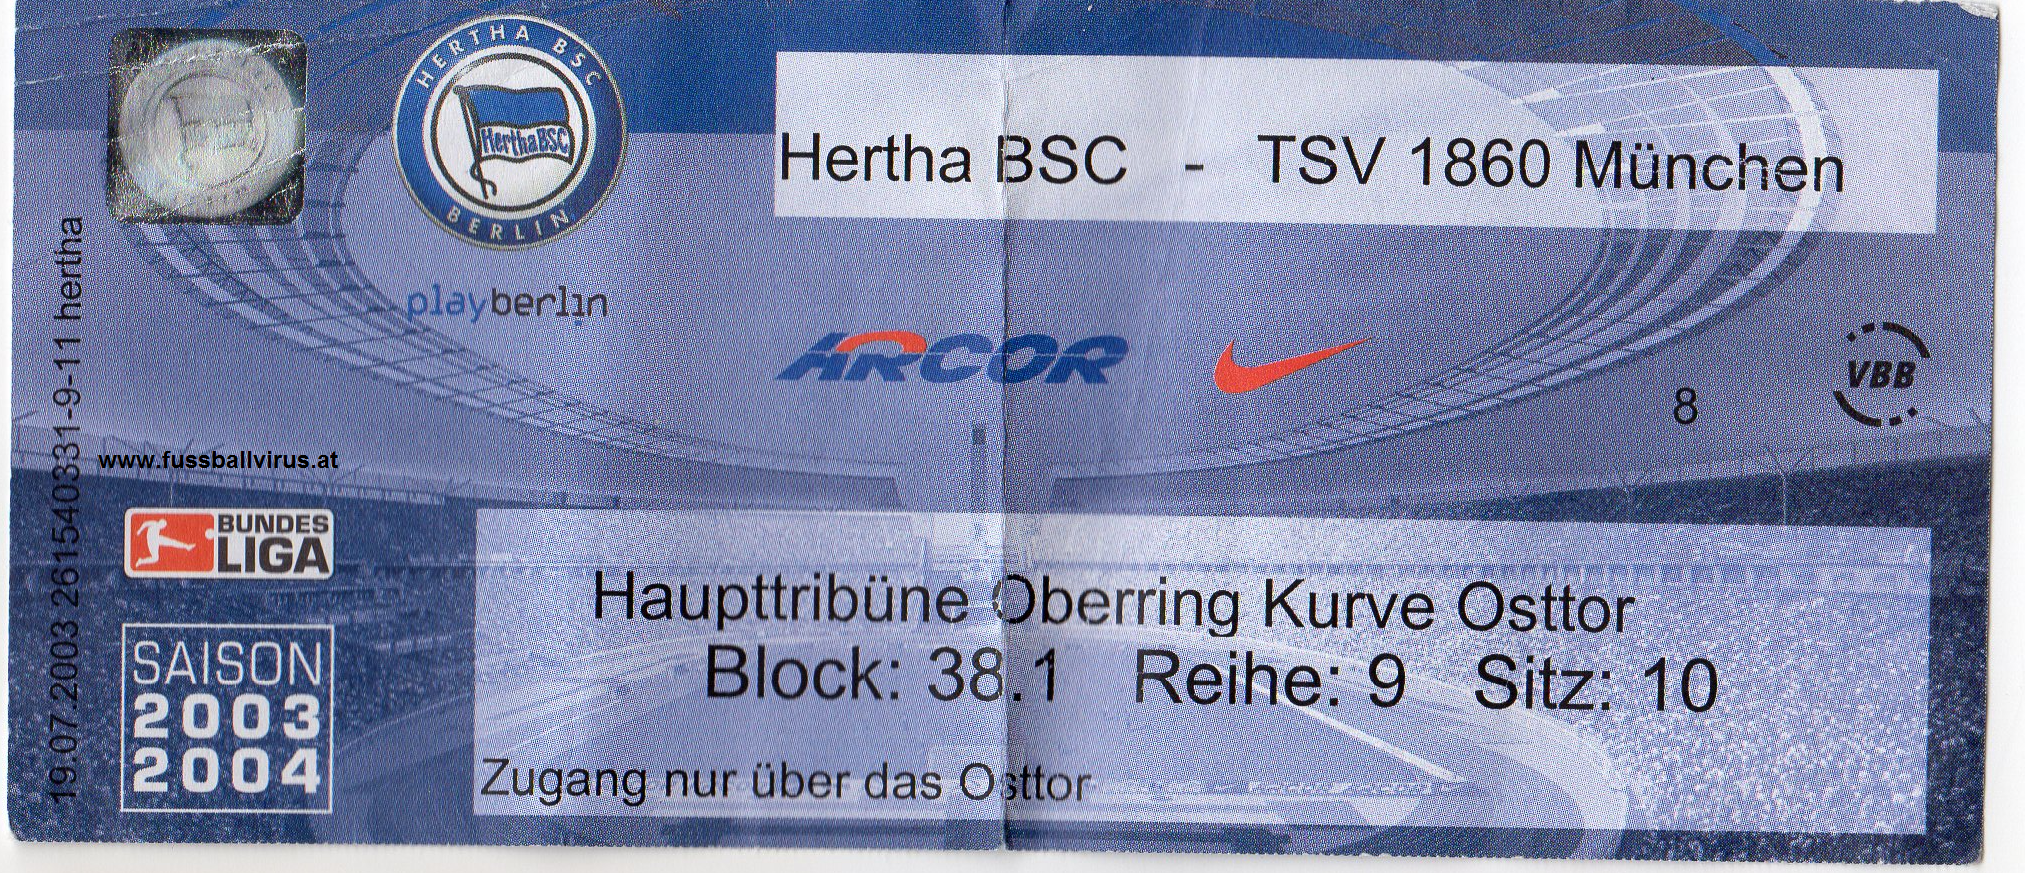 14.12. Hertha BSC Berlin - TSV 1860 München